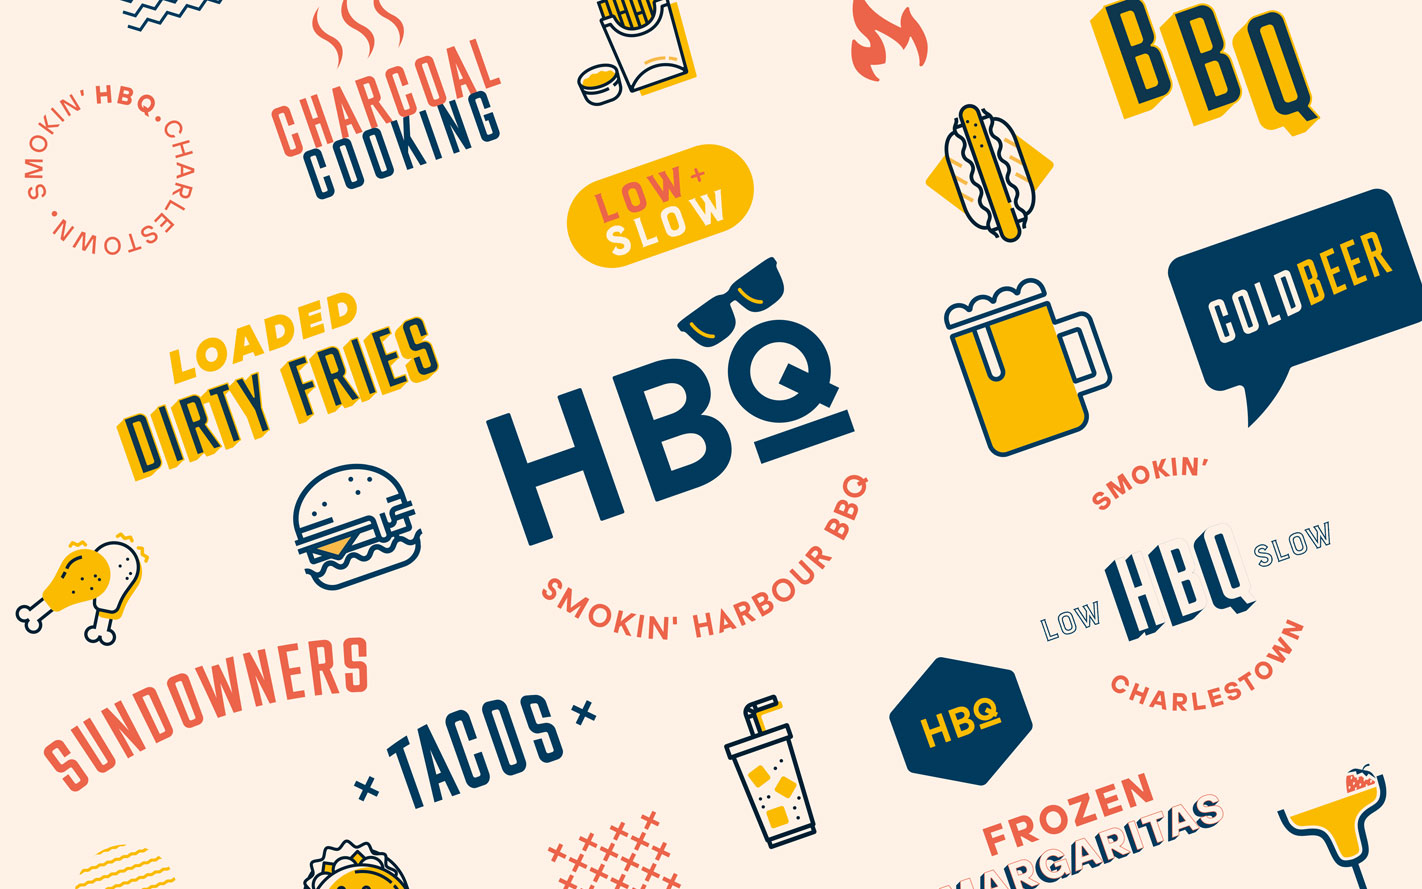 HBQ BBQ restaurant branding and design for print